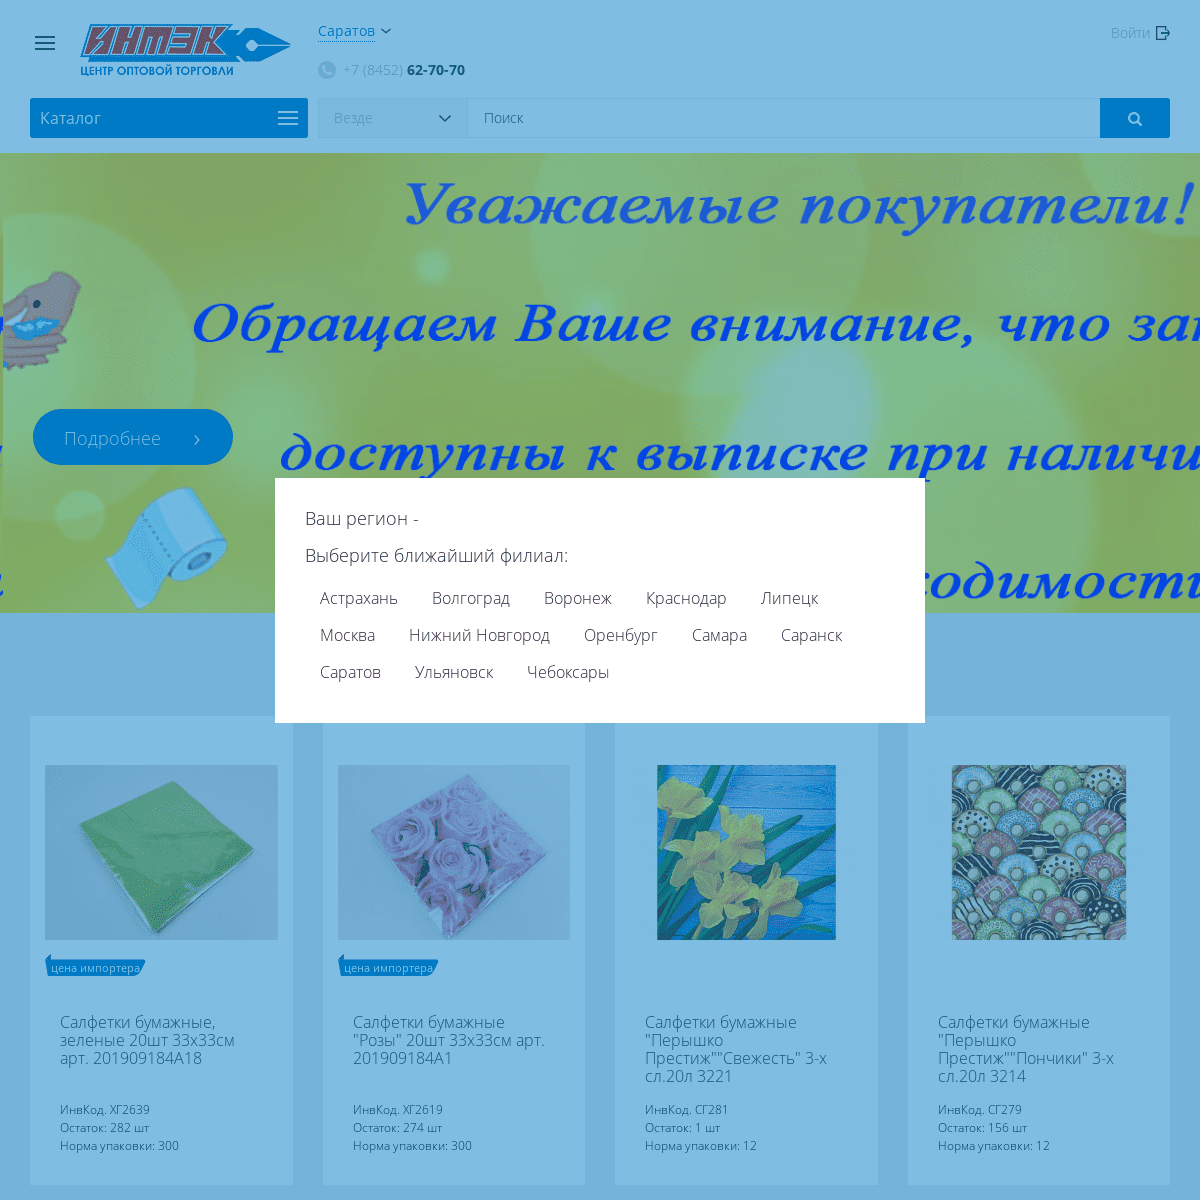 A complete backup of inteksar.ru